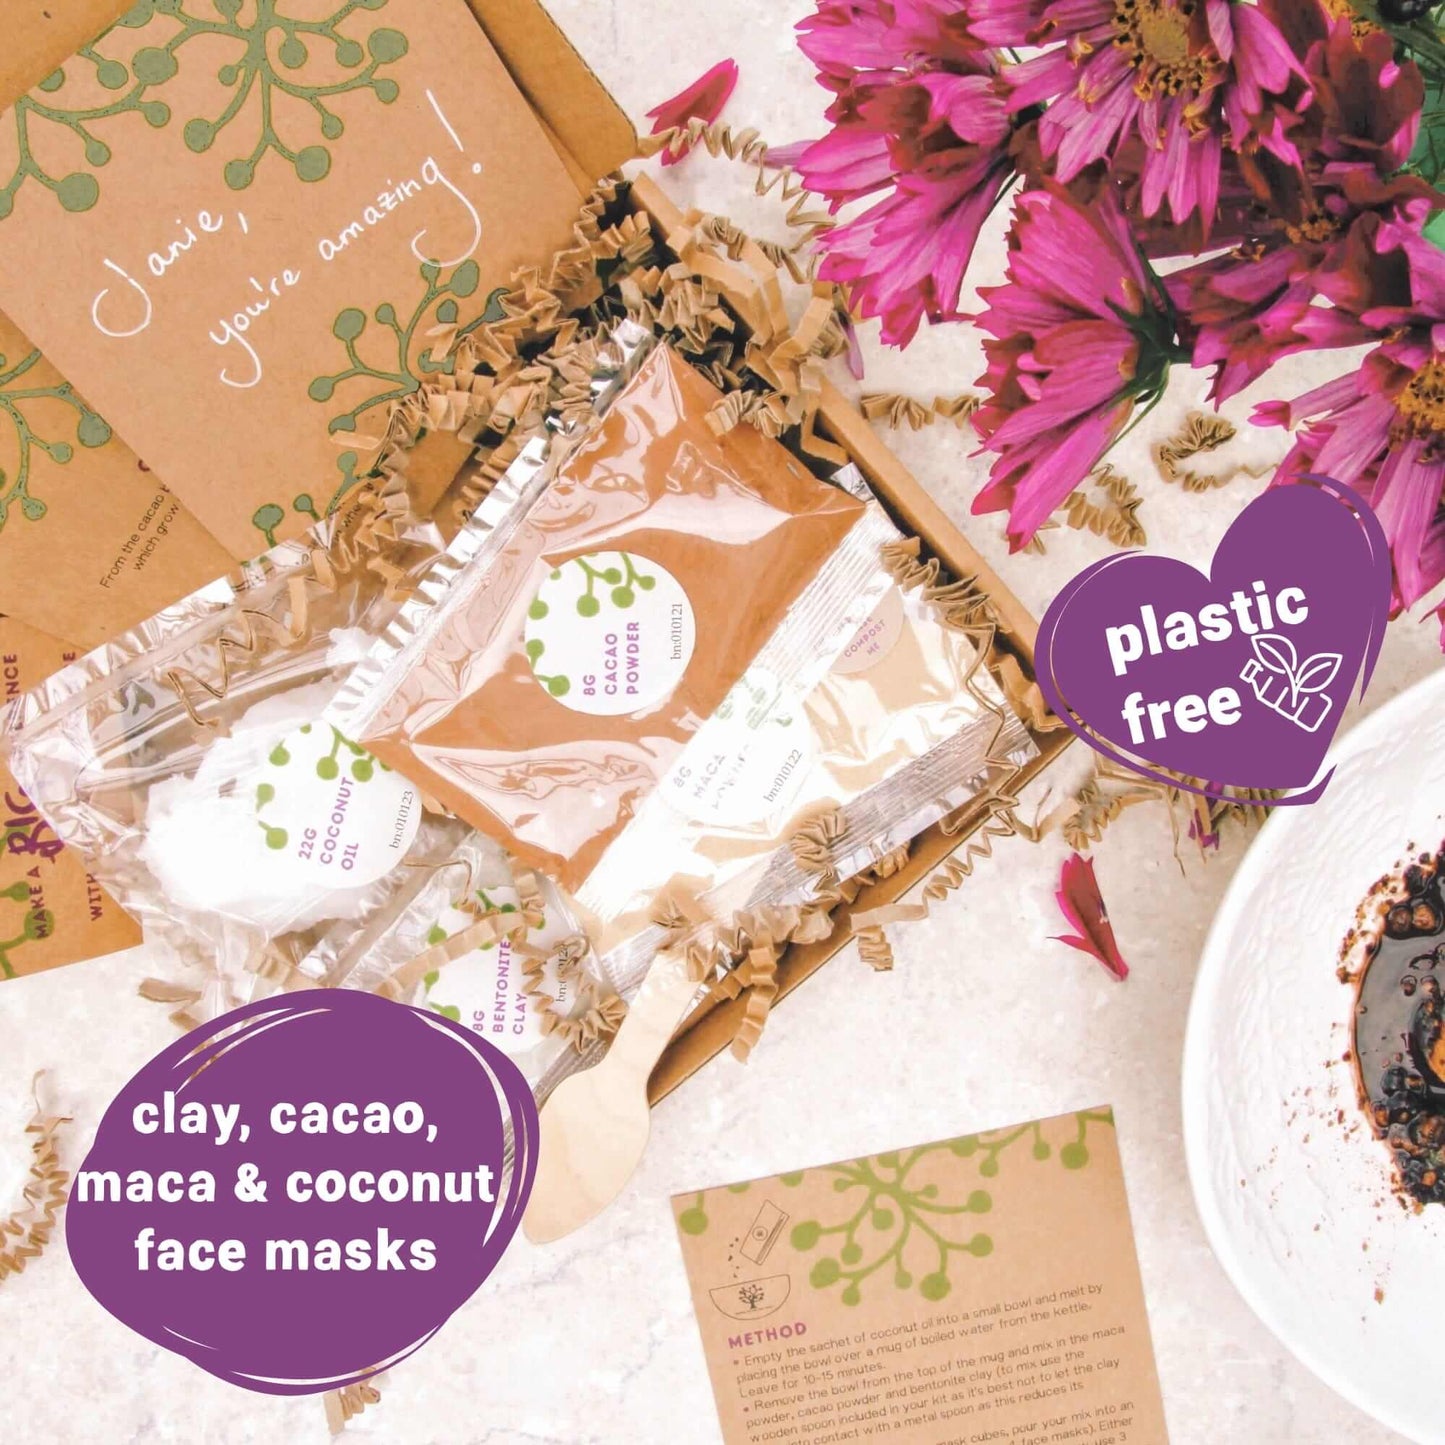 organic face mask kit ingredients packaged plastic free inside mum gift box